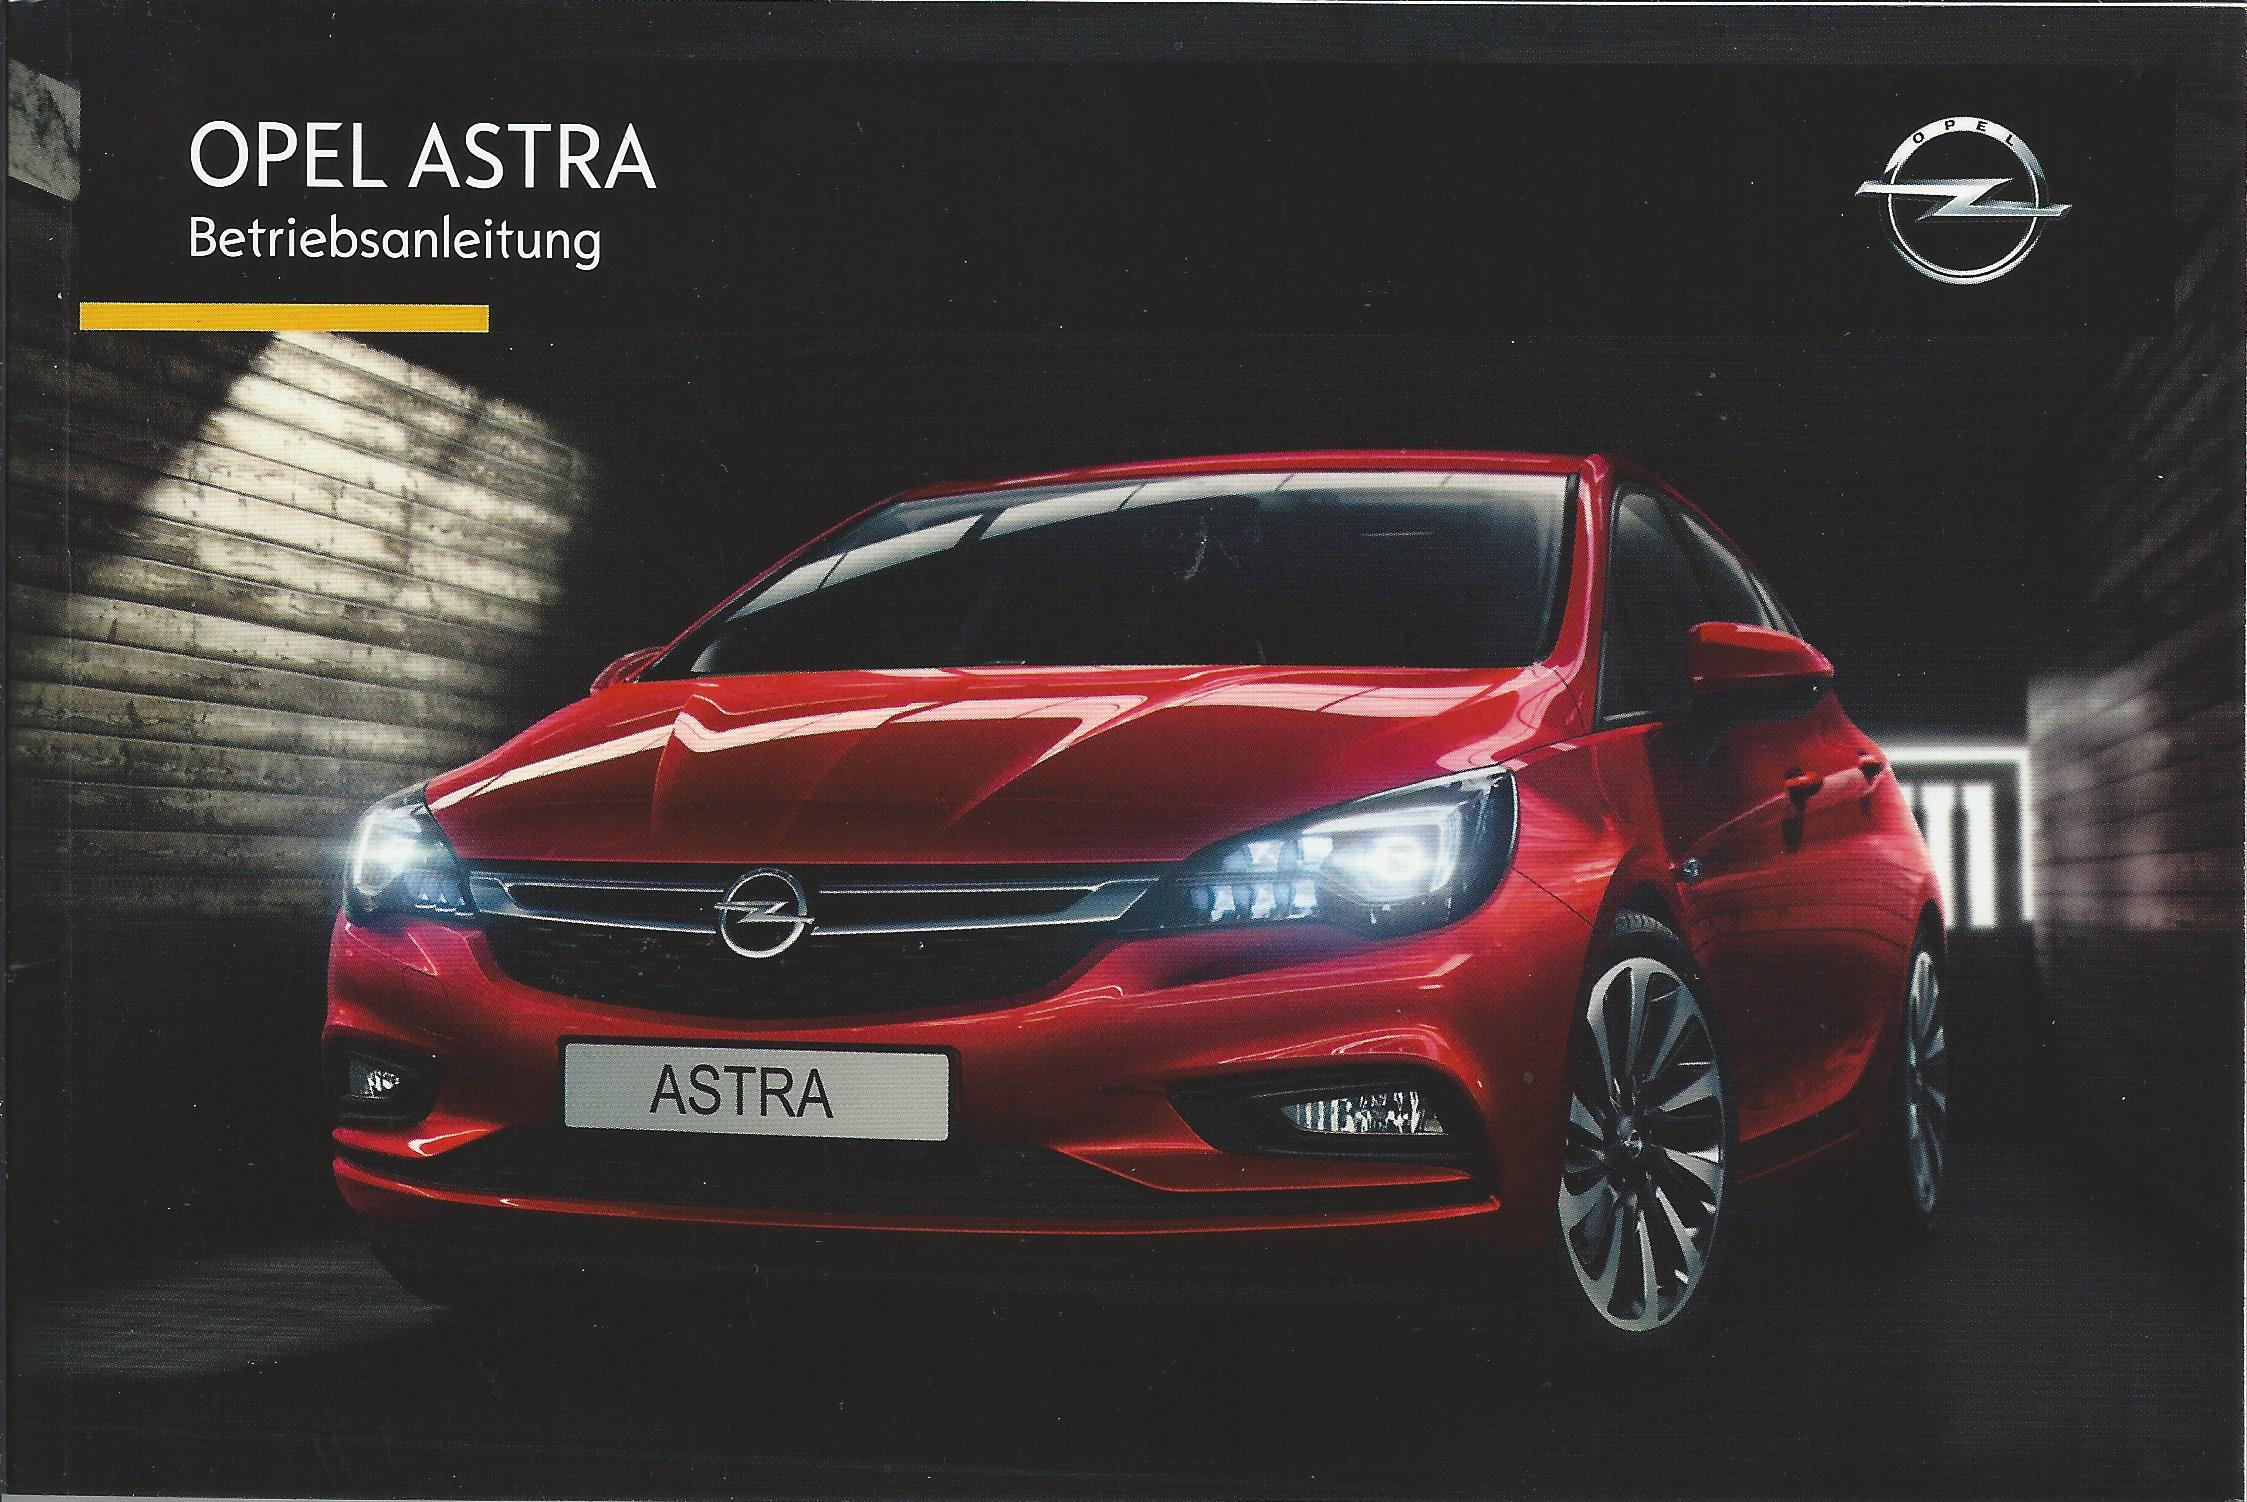 Opel Astra K Betriebsanleitung 16 Bedienungsanleitung Handbuch Bordbuch Ba Ebay